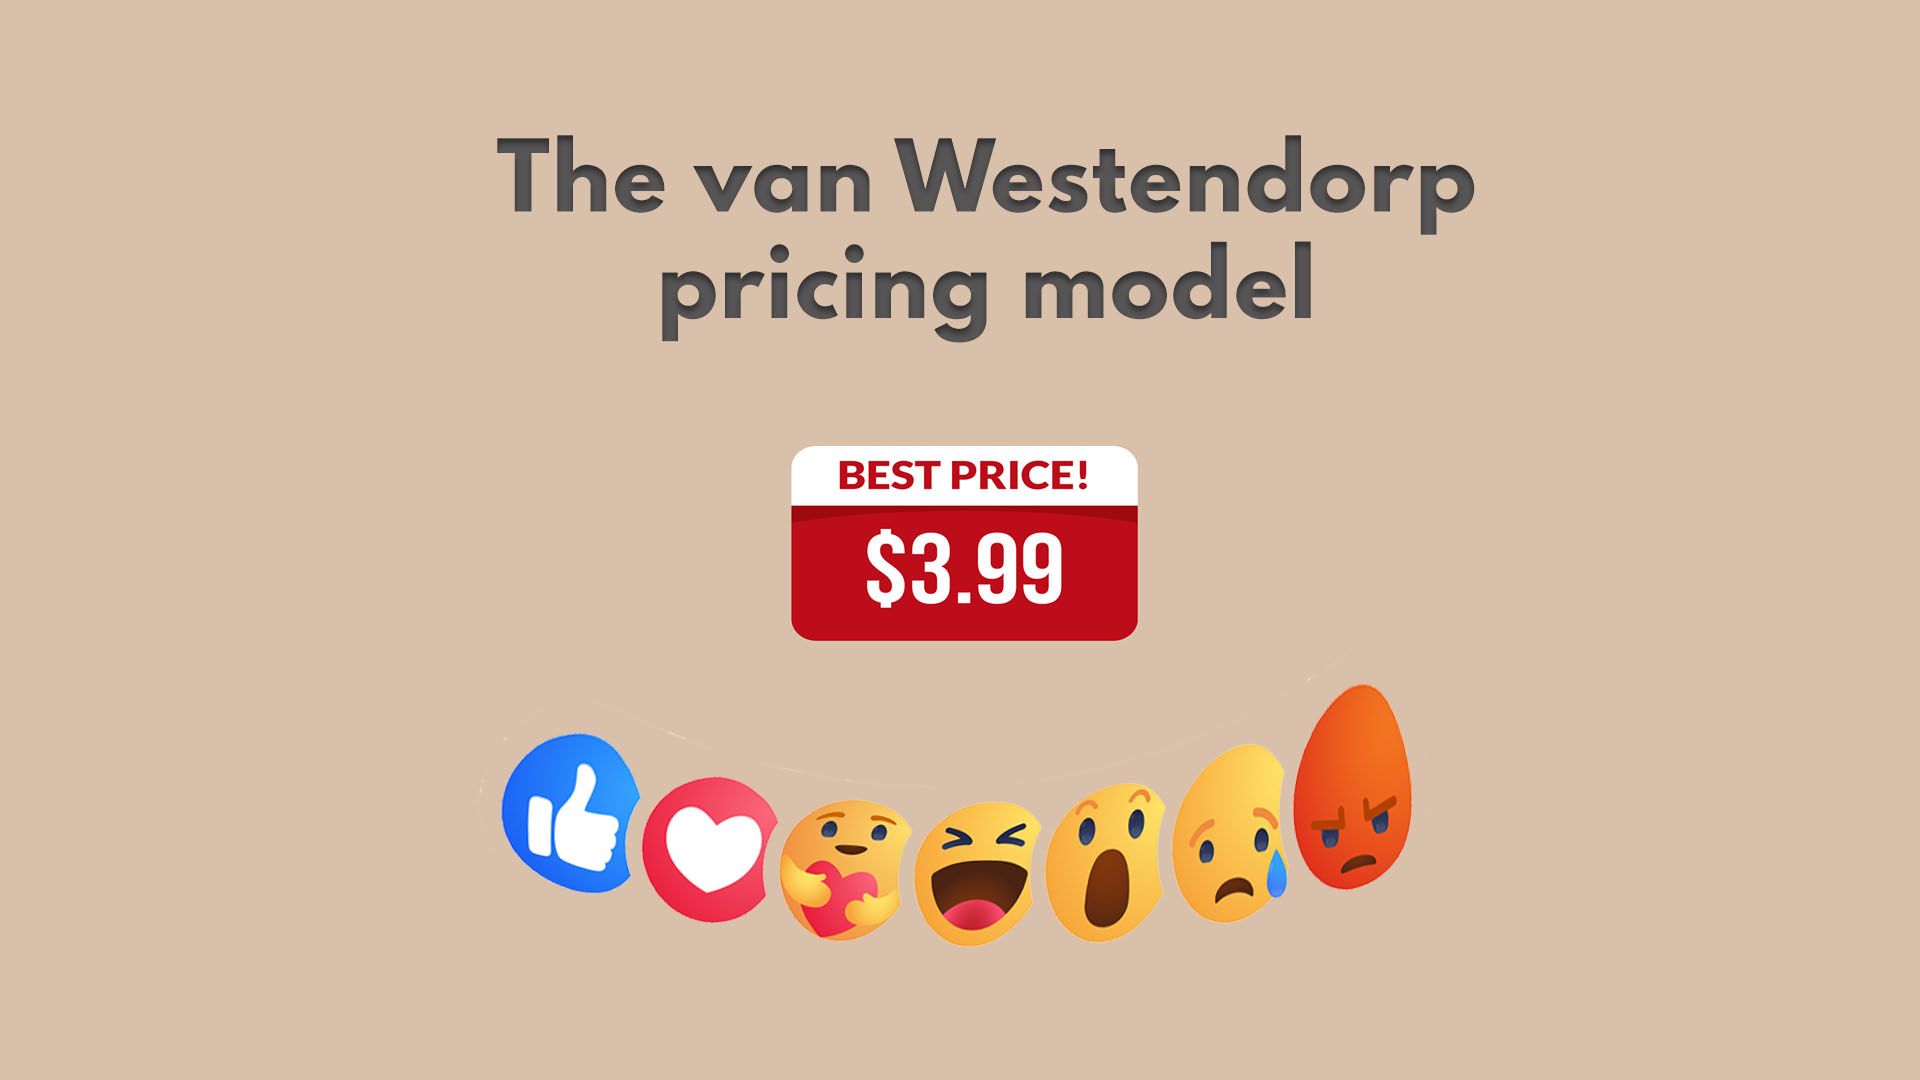 Van Westendorp pricing model survey